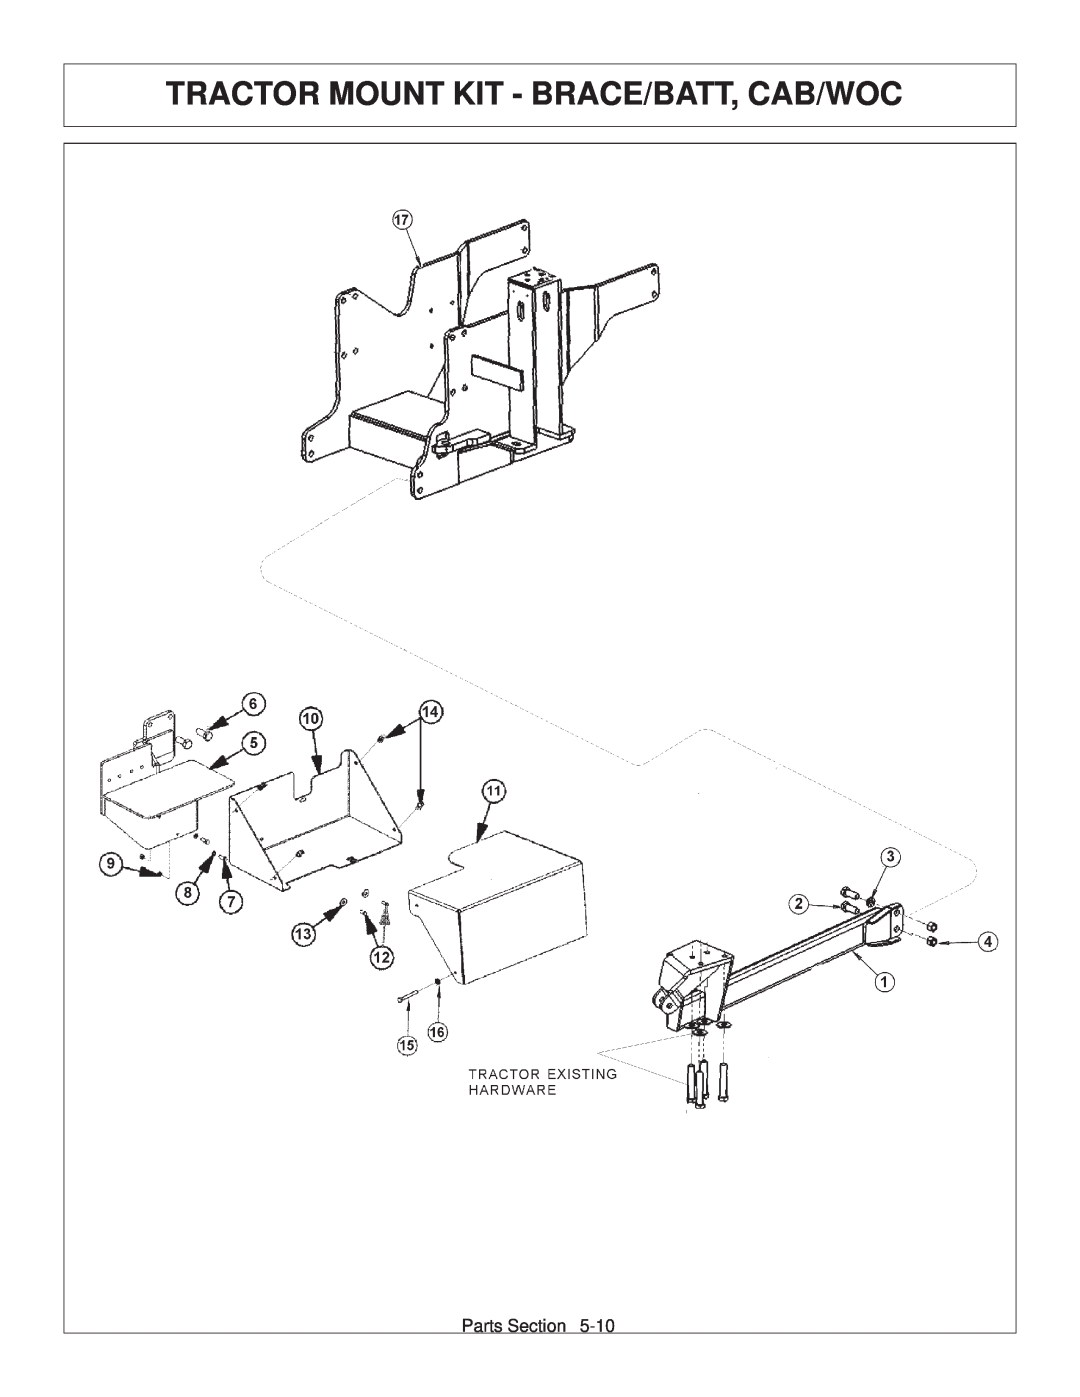 Tiger Products Co., Ltd 6020009 manual Tractor Mount Kit - Brace/Batt, Cab/Woc, Parts Section 